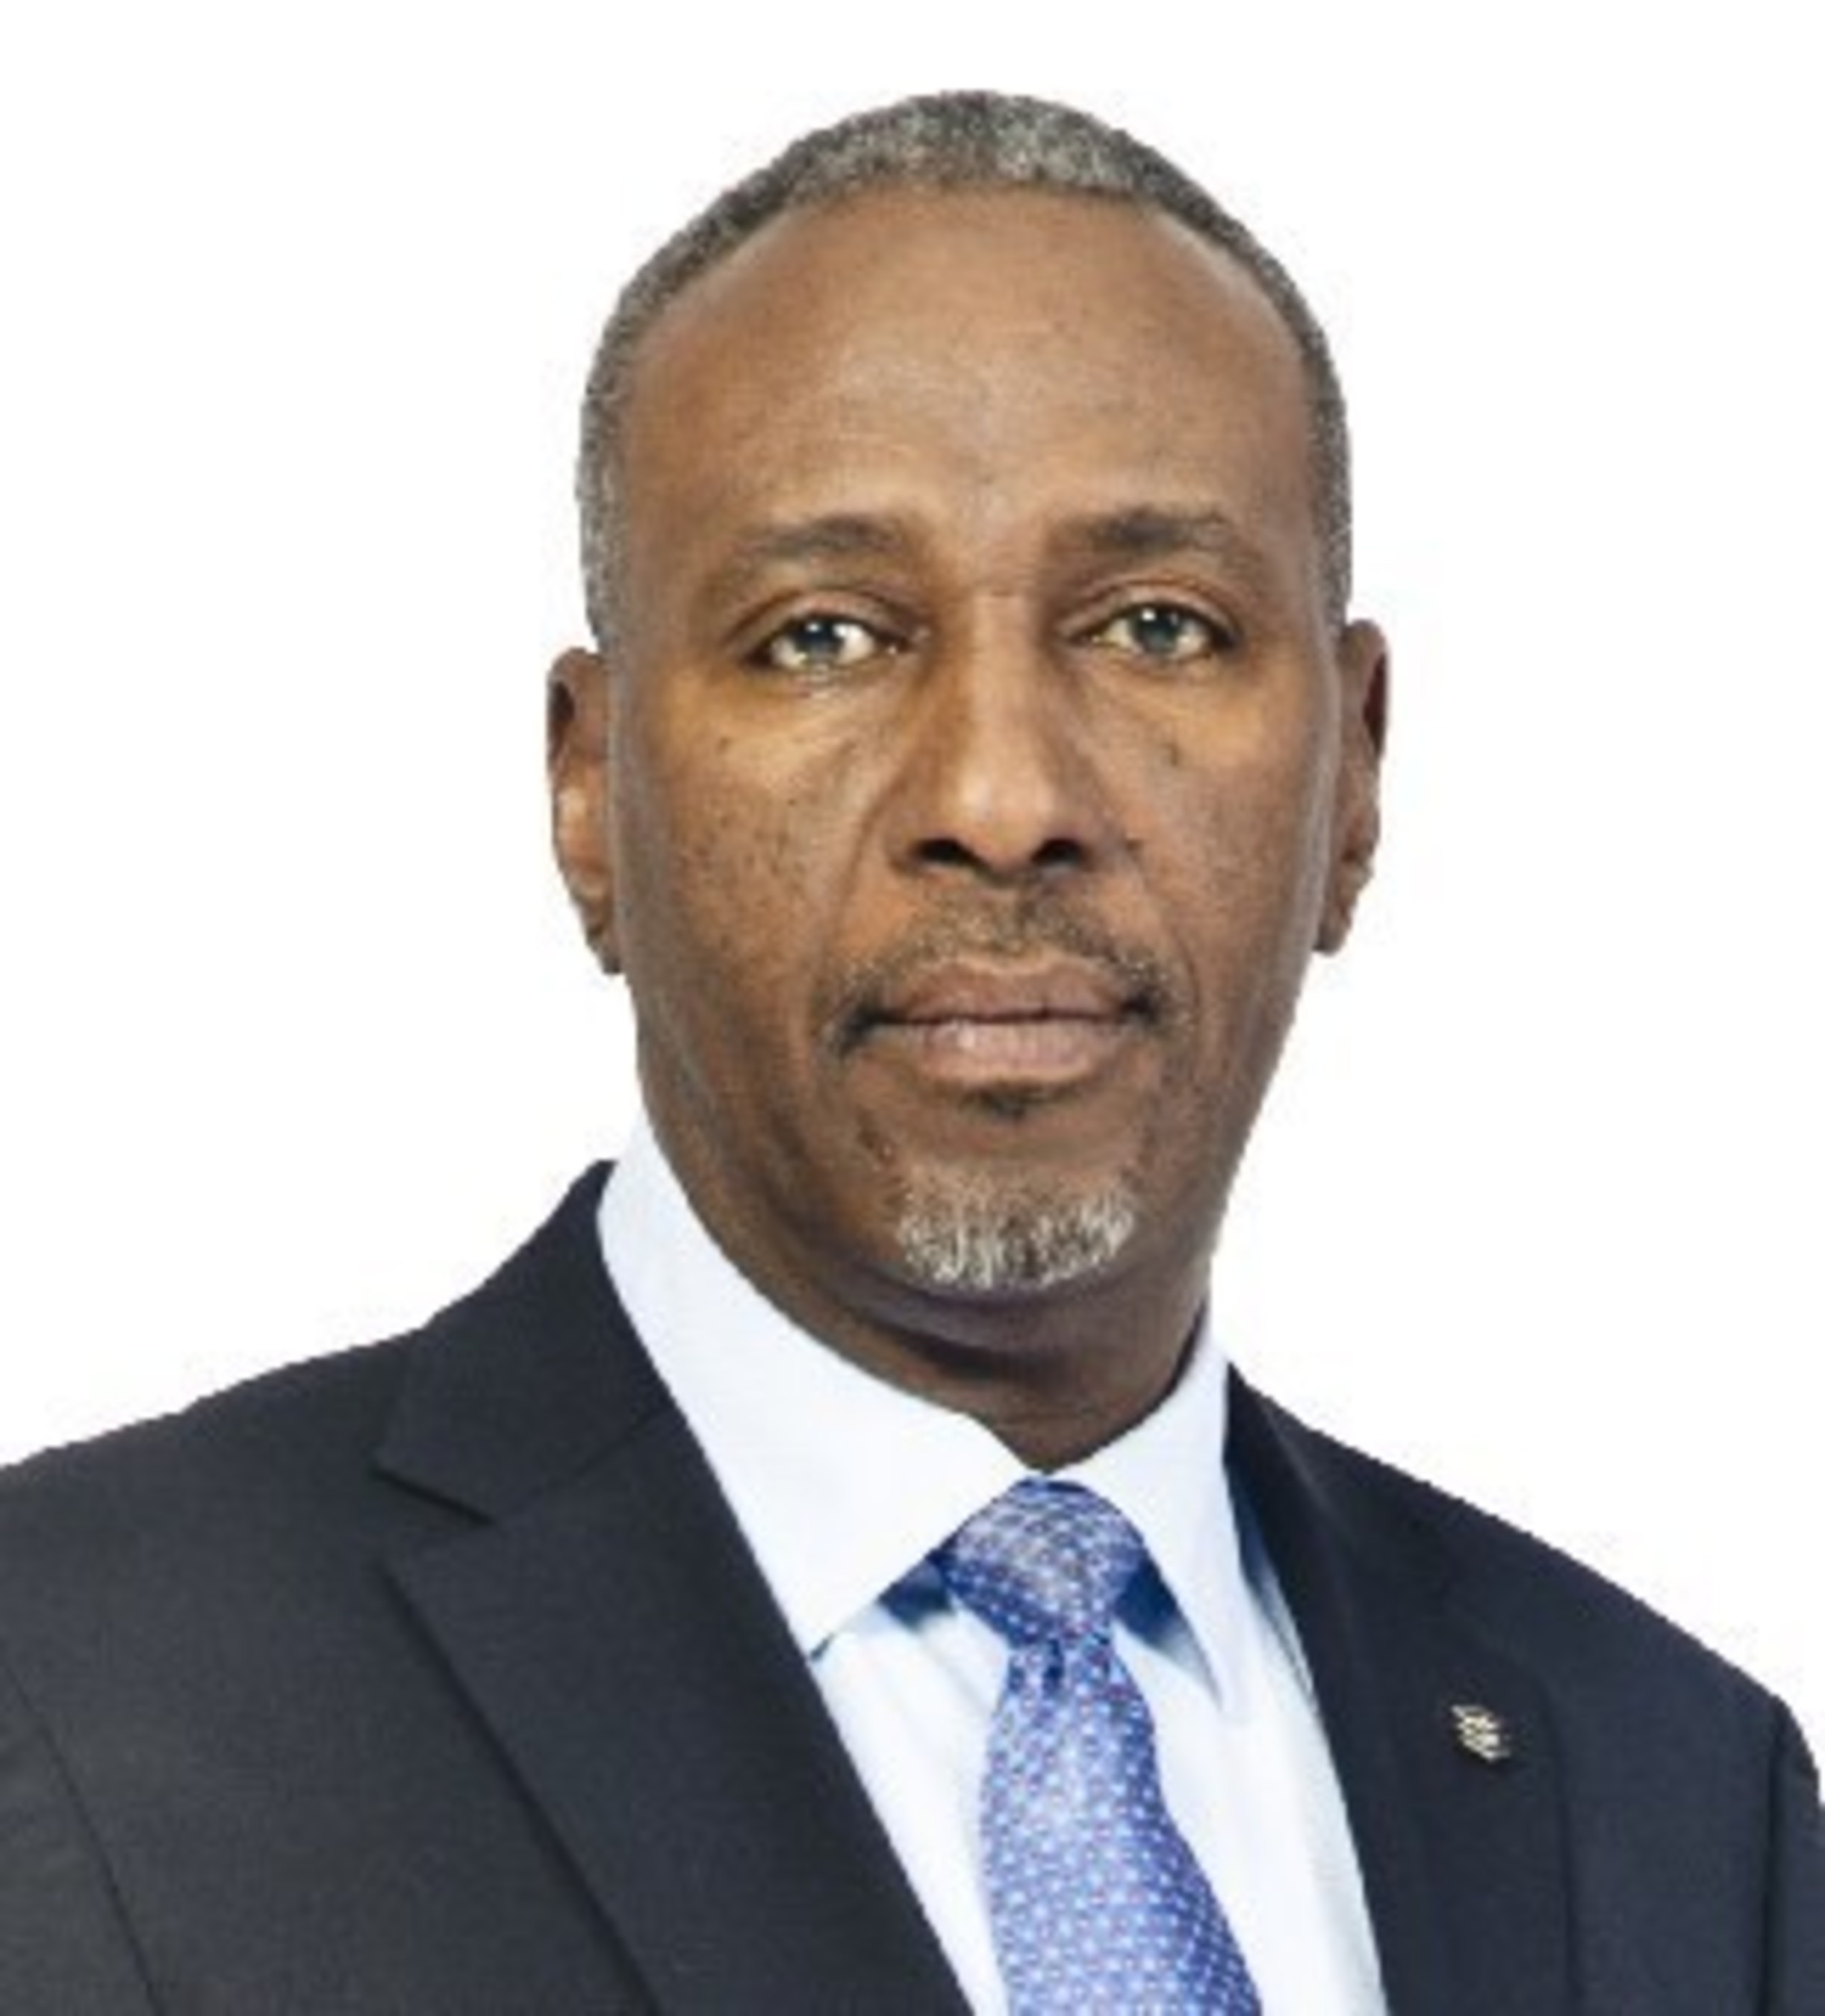 Abdul Hersiburane, Executive Vice President and Director of Business Development, MainStreet Bank